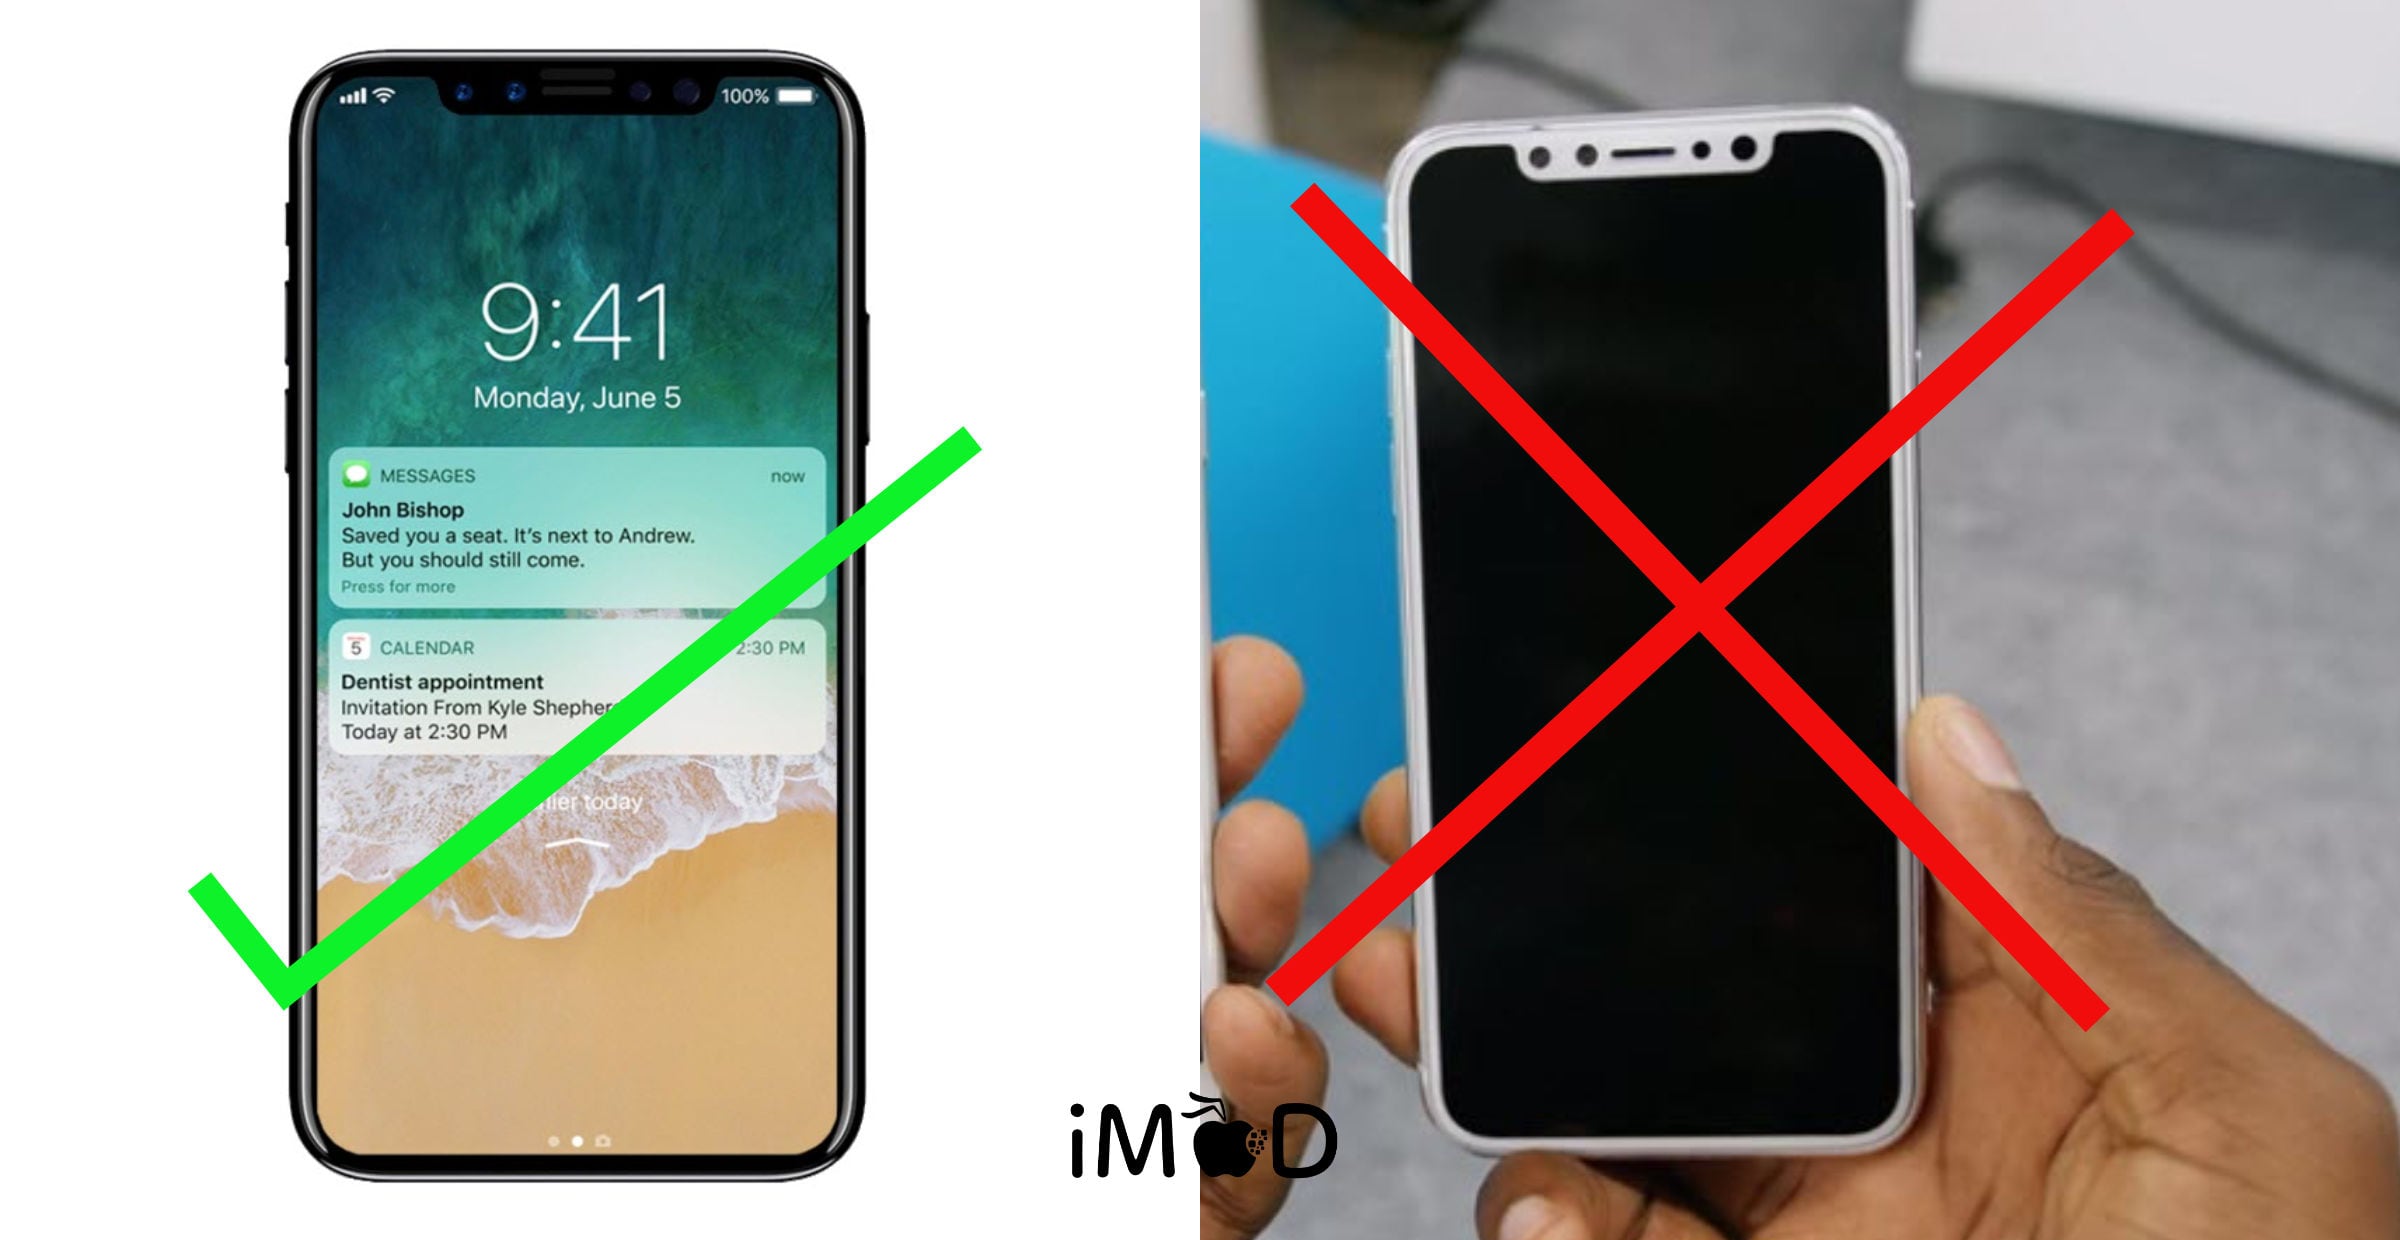 Iphone X No White Bezel